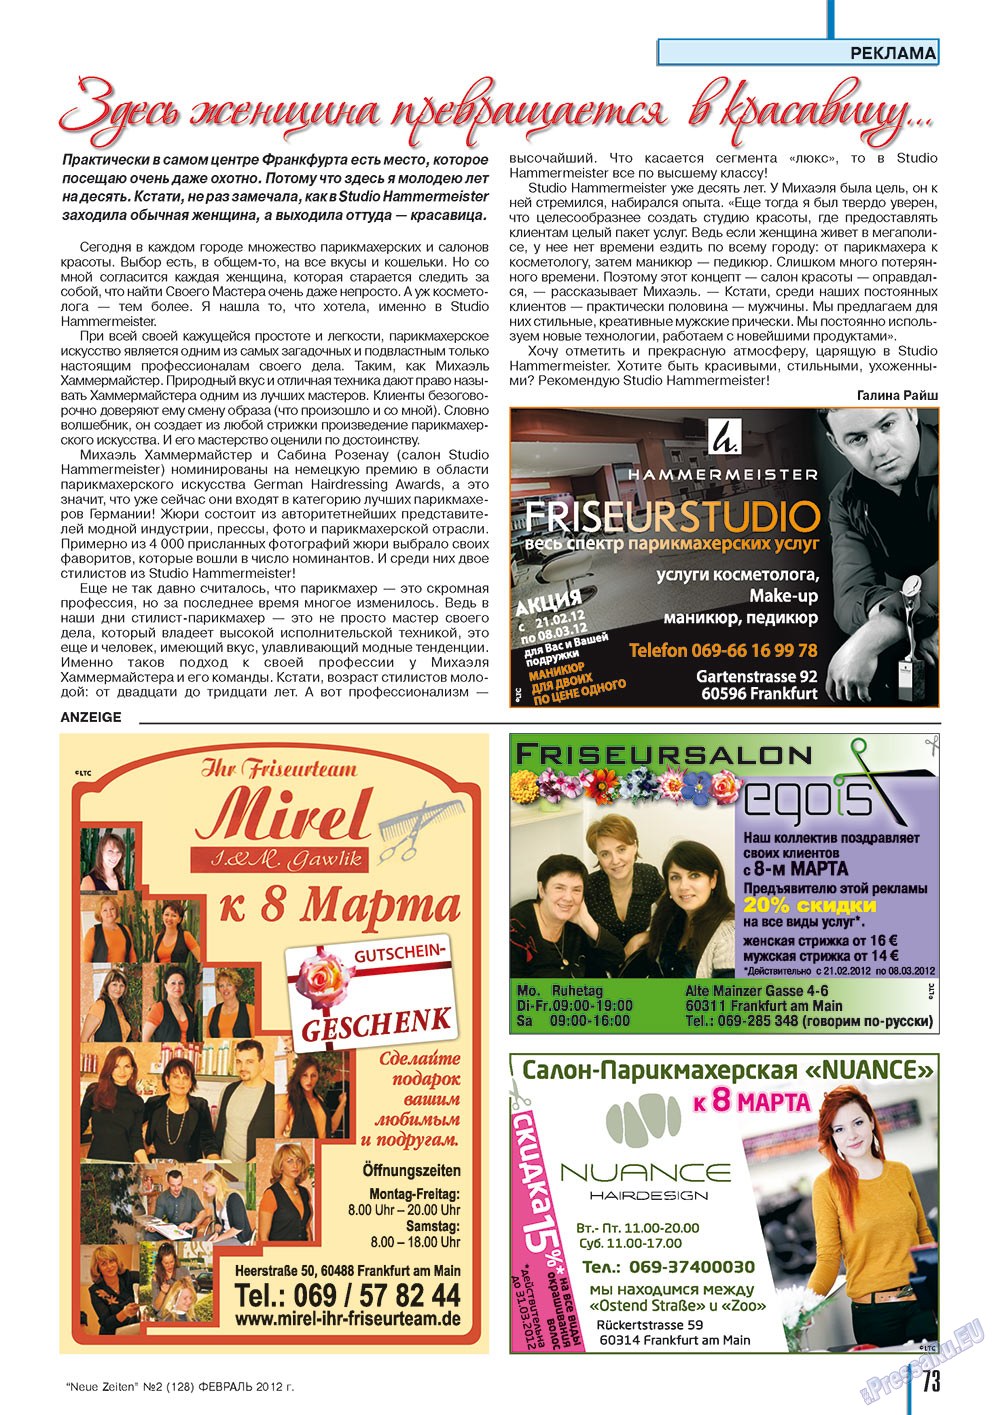 Neue Zeiten (журнал). 2012 год, номер 2, стр. 73